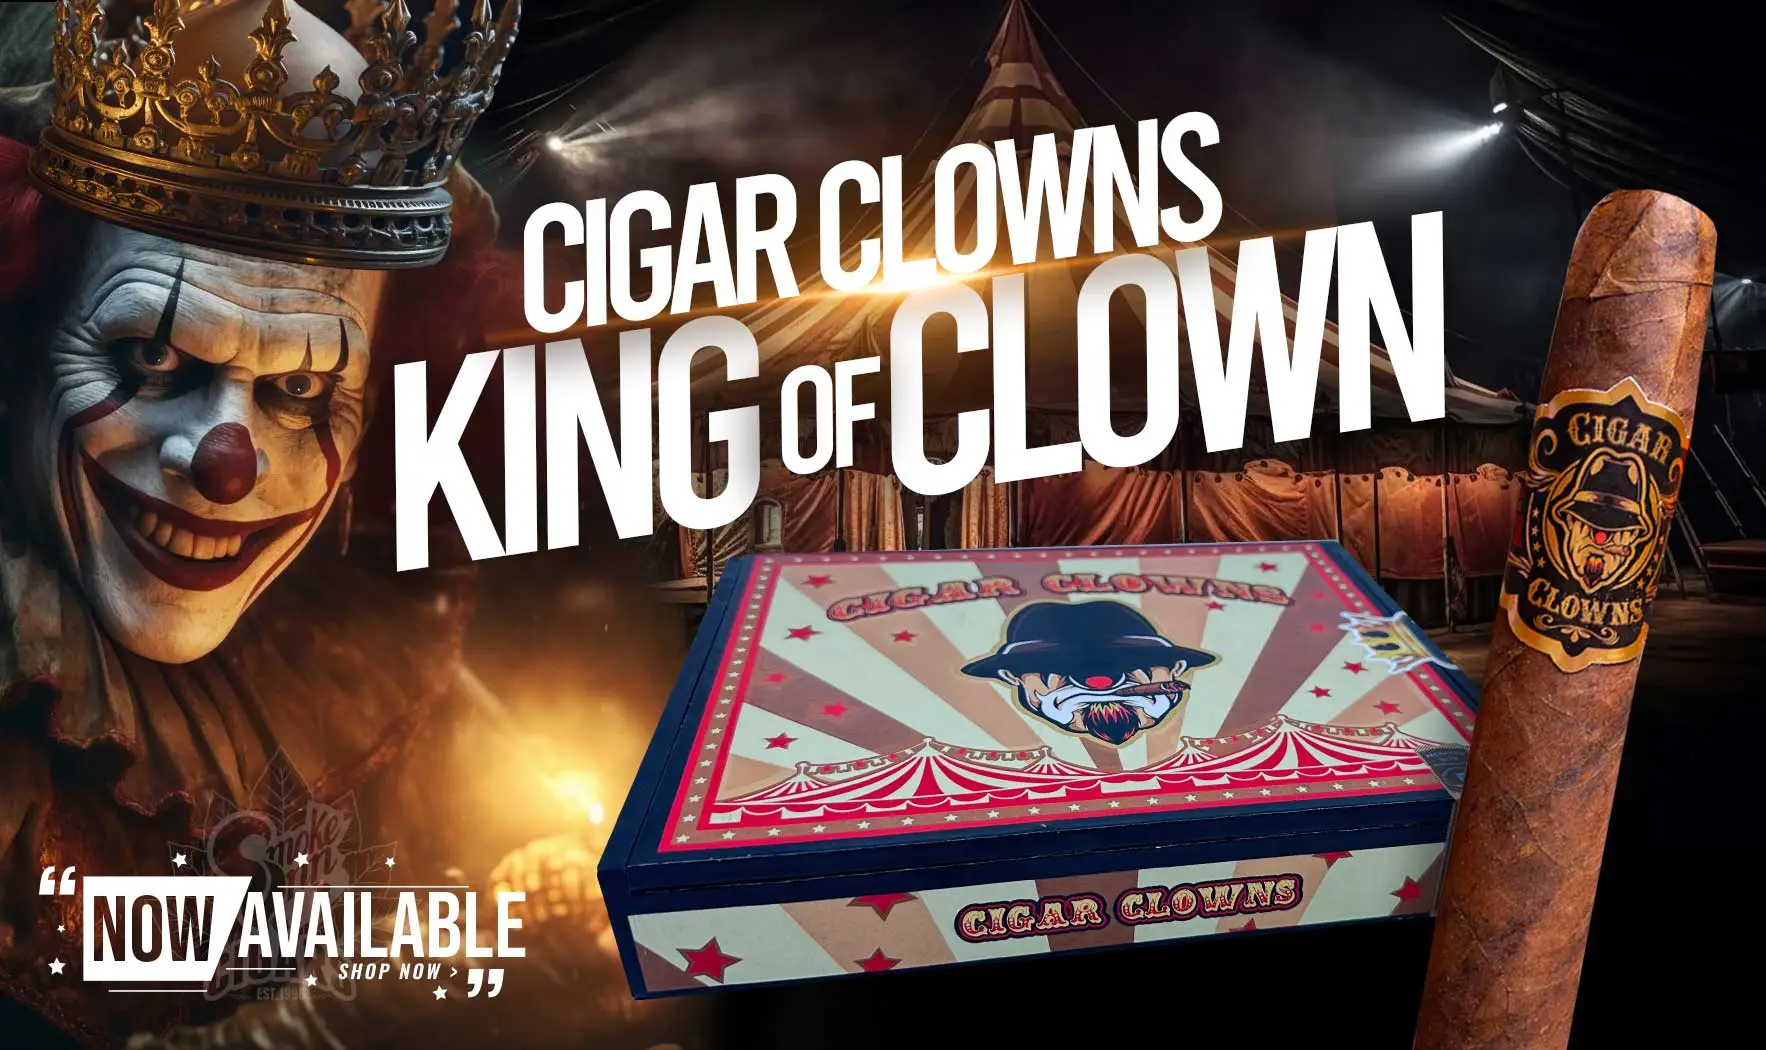 Cigar Clowns King of Clowns